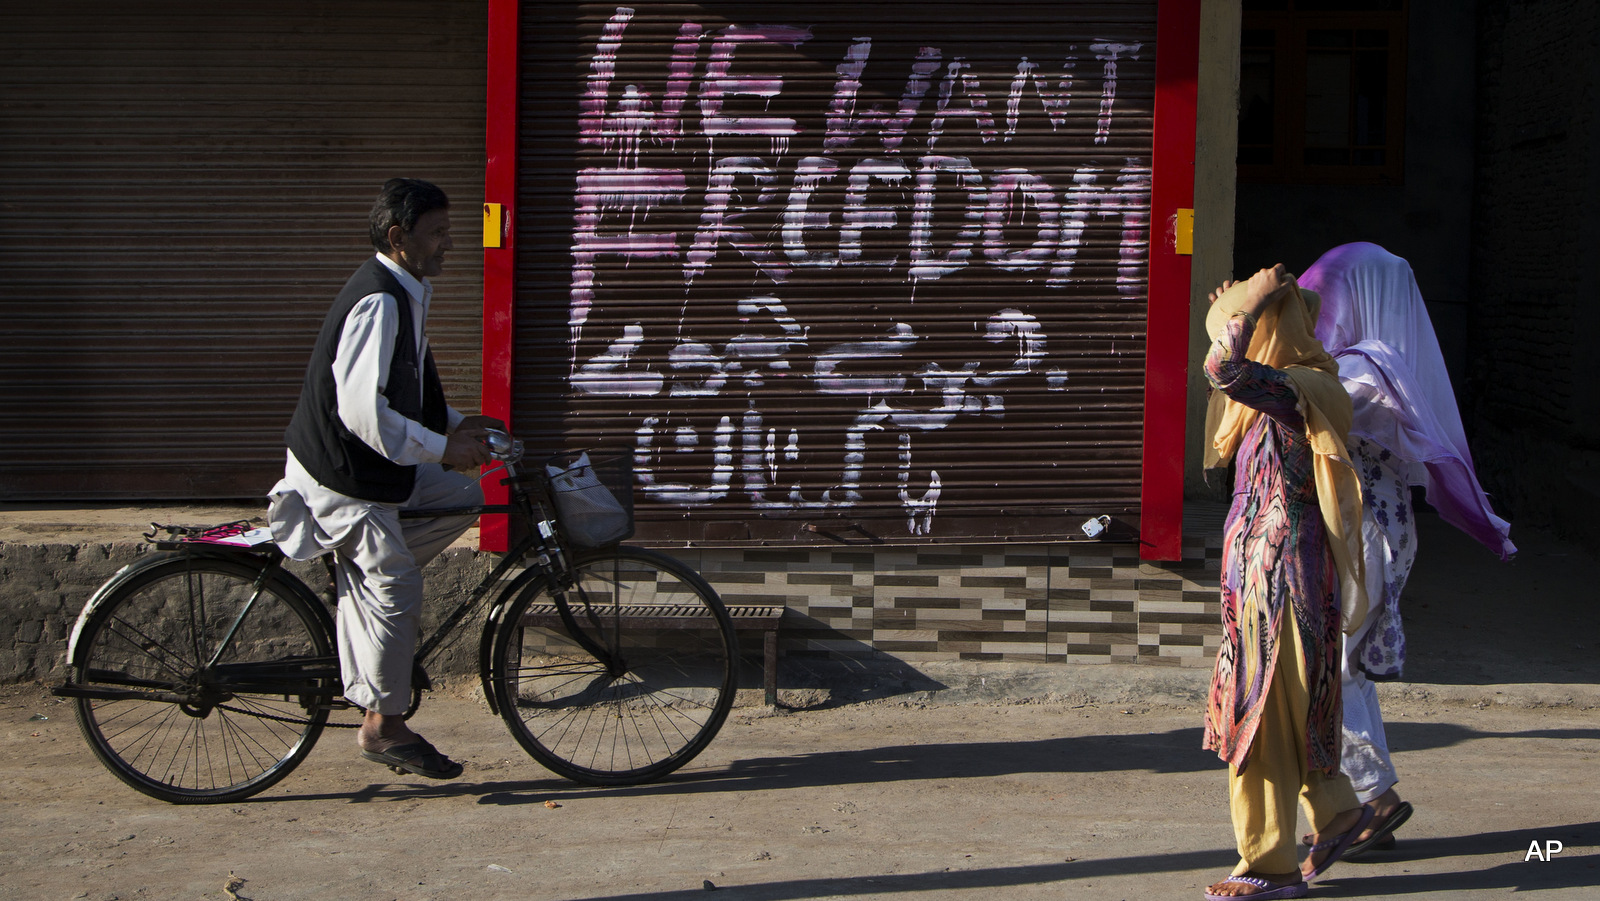 Kashmiri women walk past a closed market with graffiti painted on the shutter of a shop in Urdu that reads "Long live Pakistan" in Srinagar, Indian occupied Kashmir, Thursday, Sept. 29, 2016. 